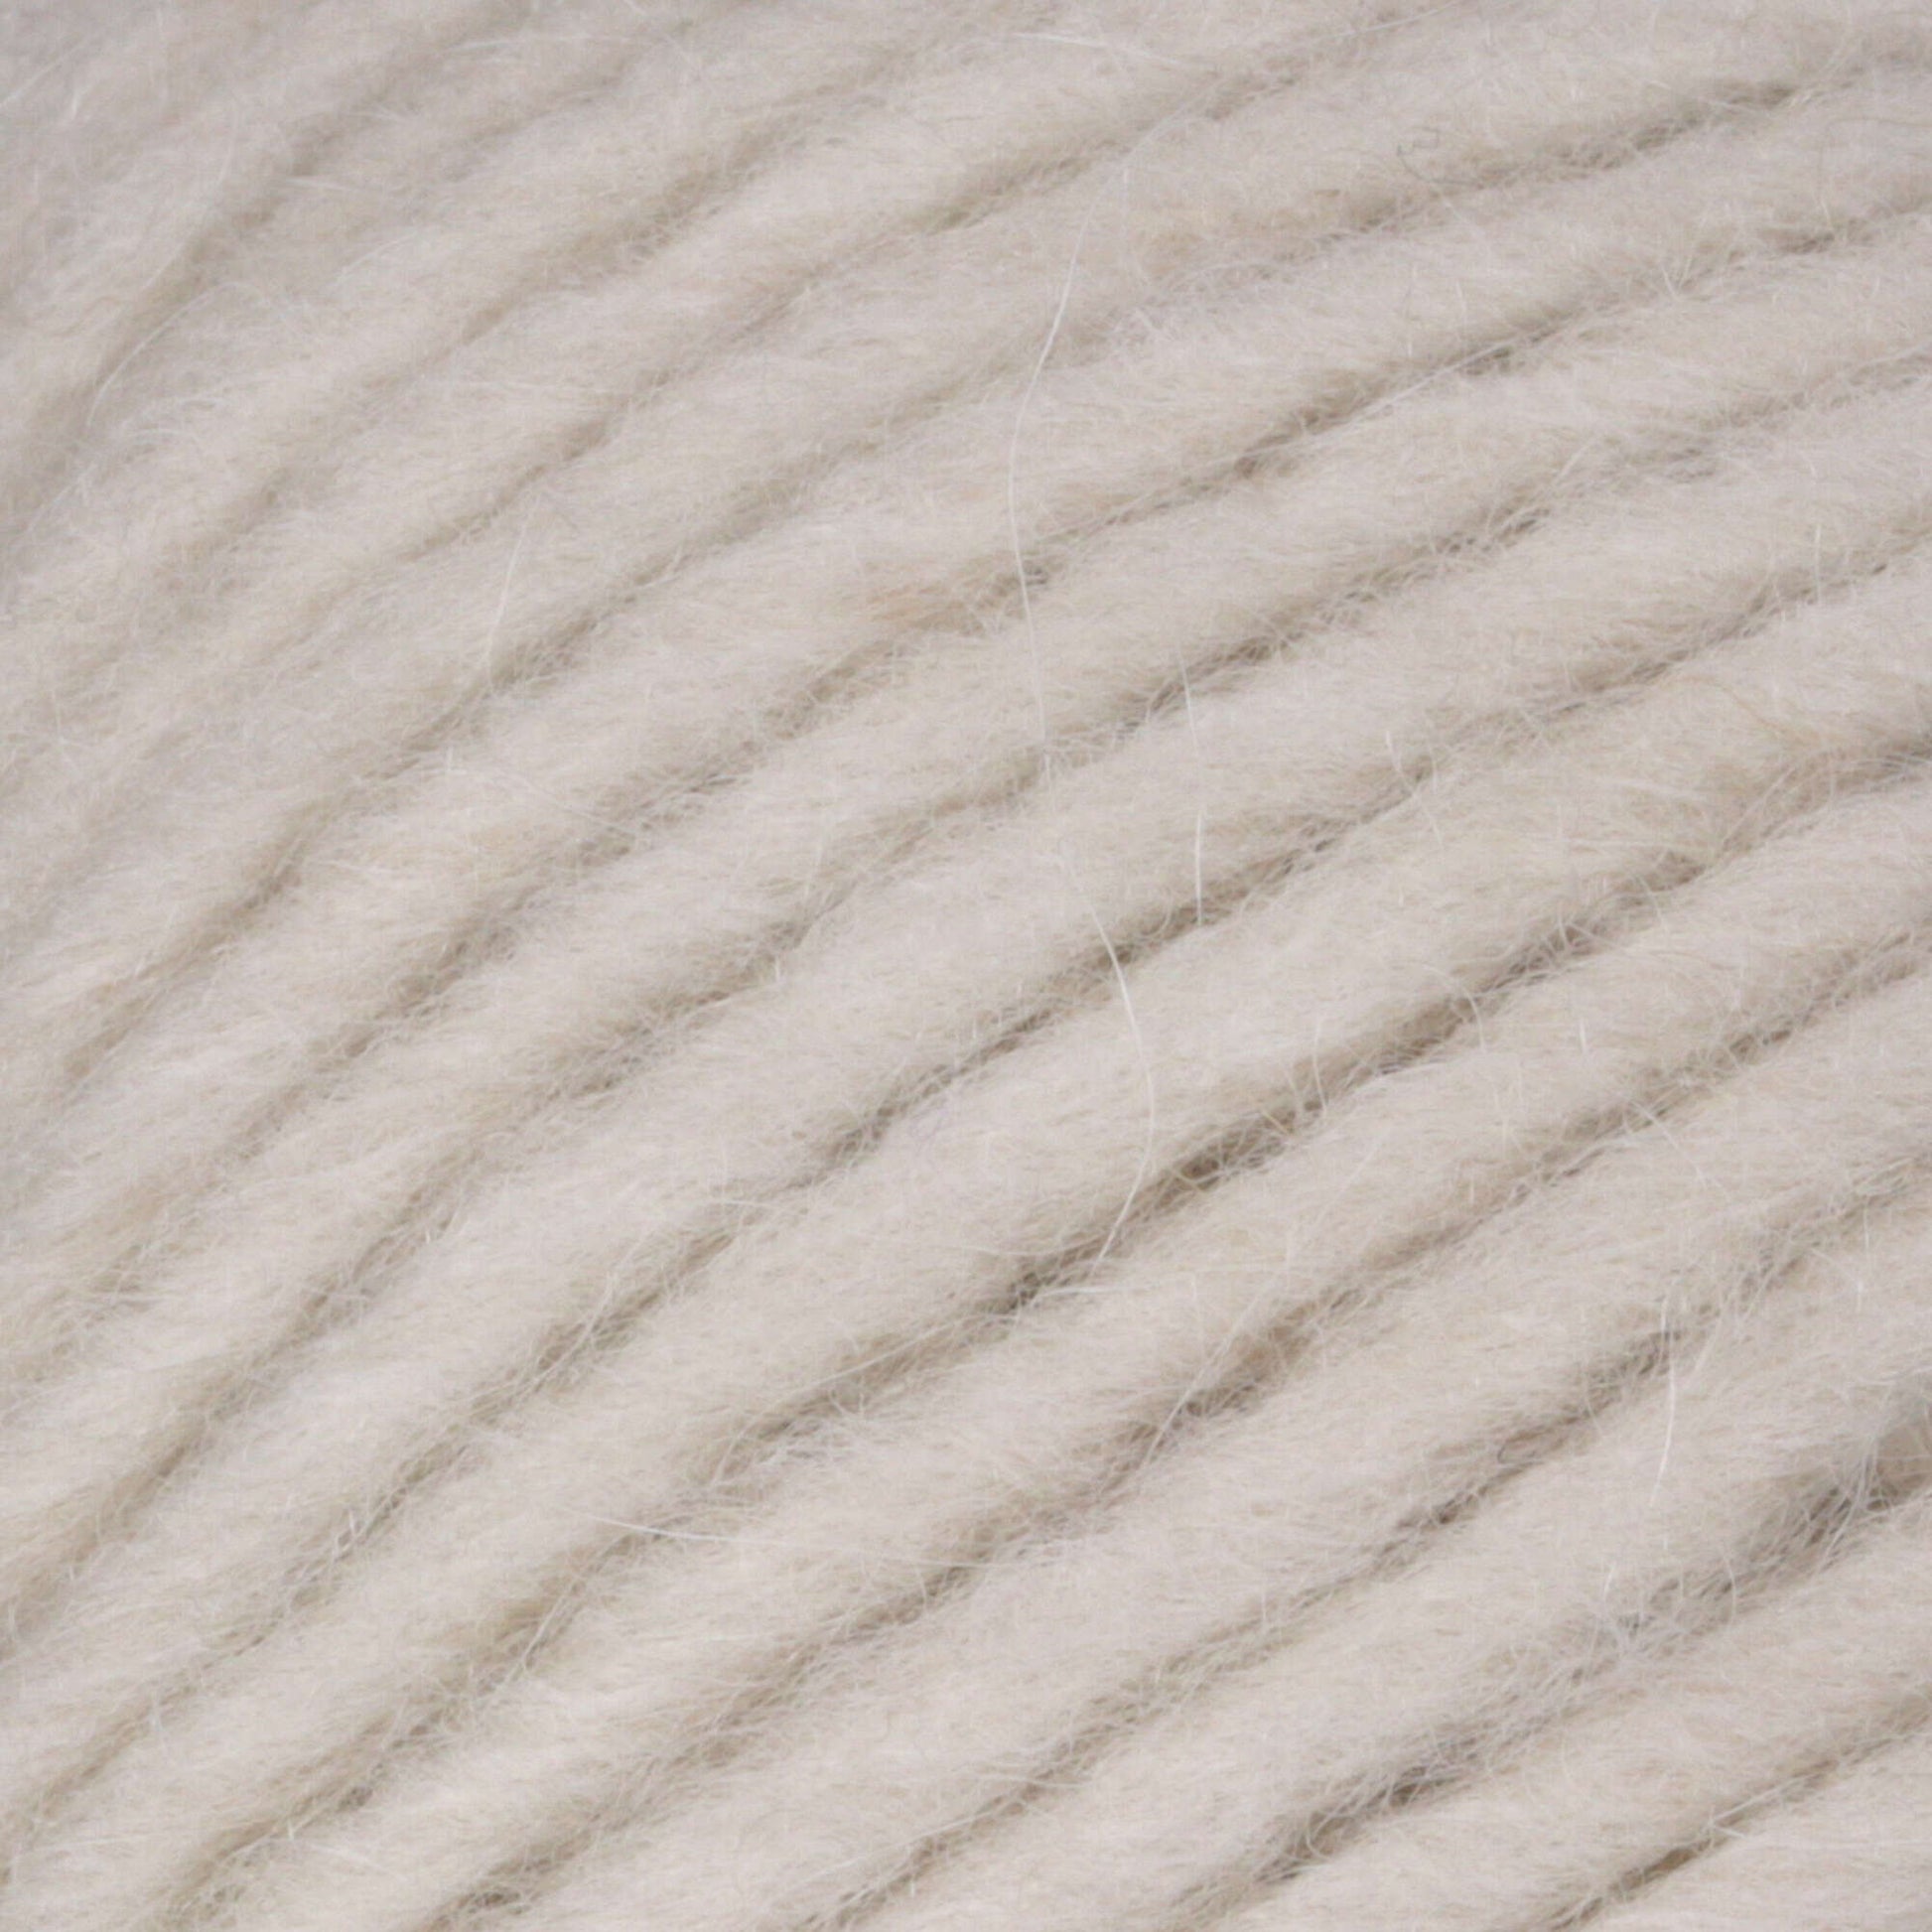 Patons Alpaca Blend Yarn - Discontinued Shades